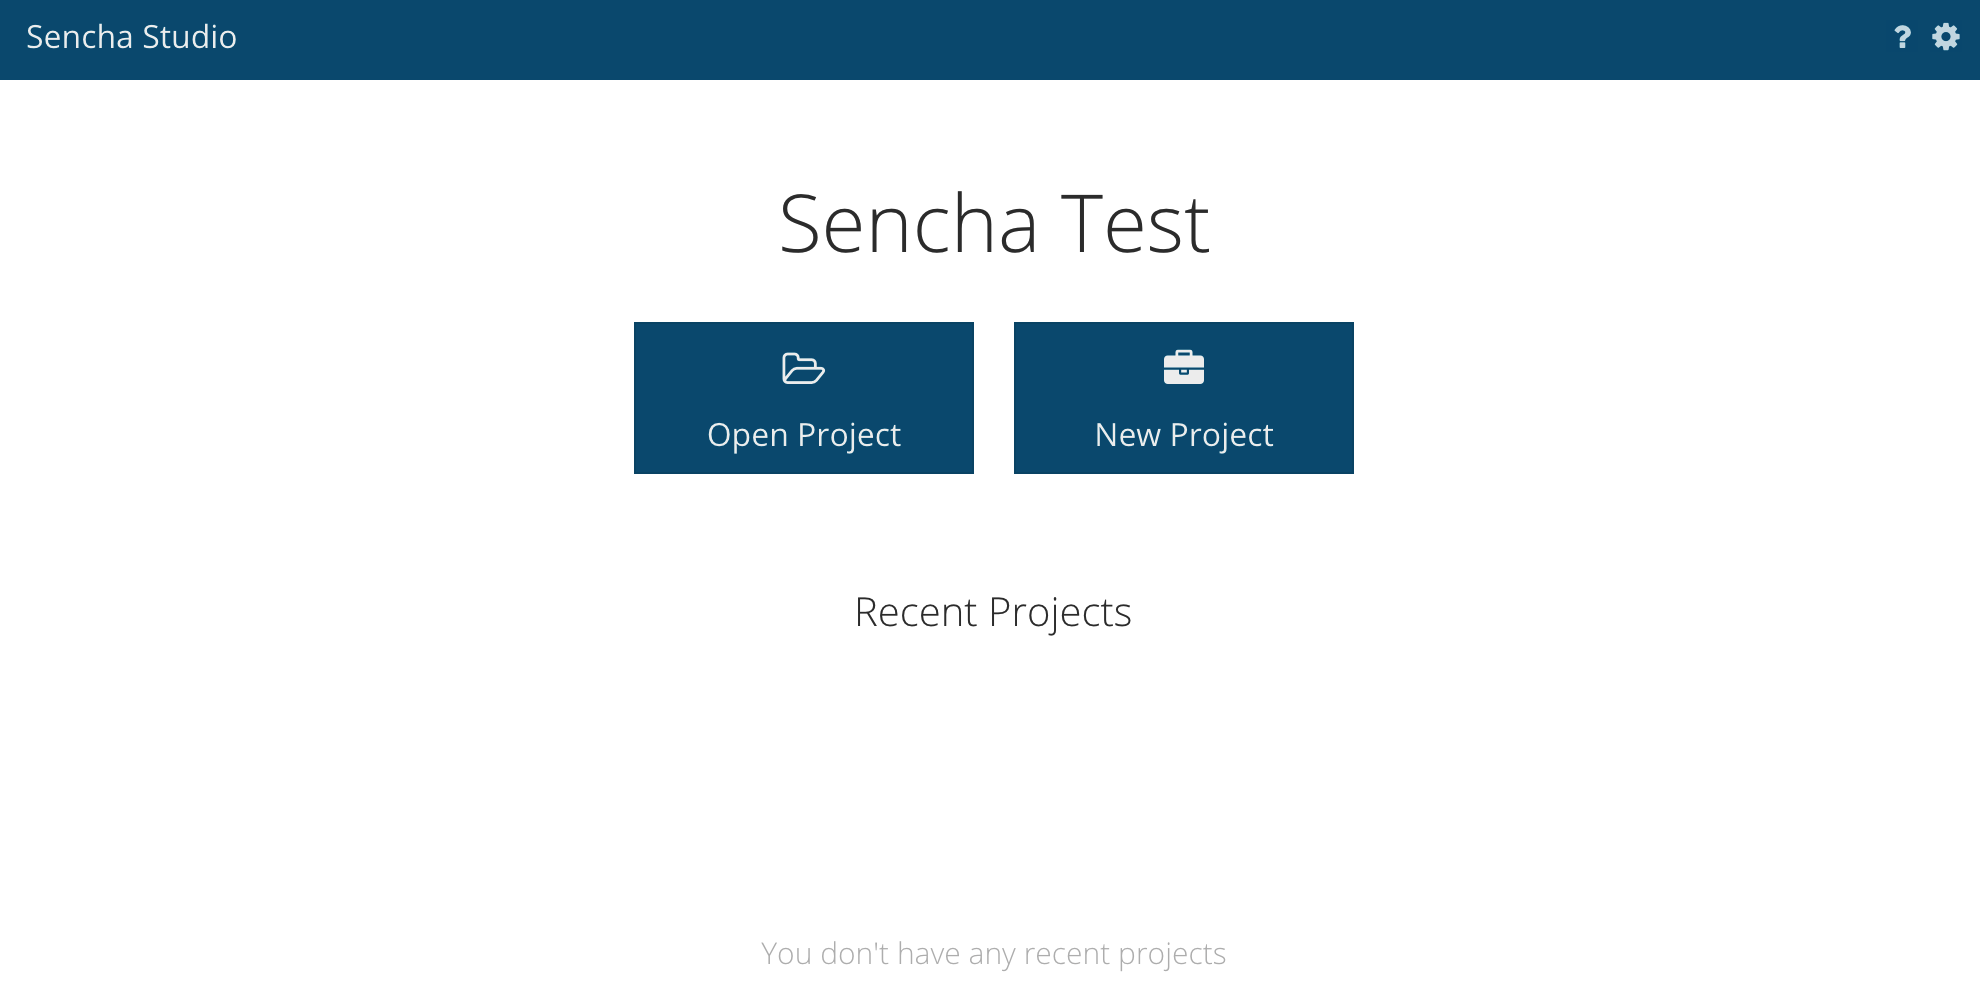 Sencha Studio Home Page